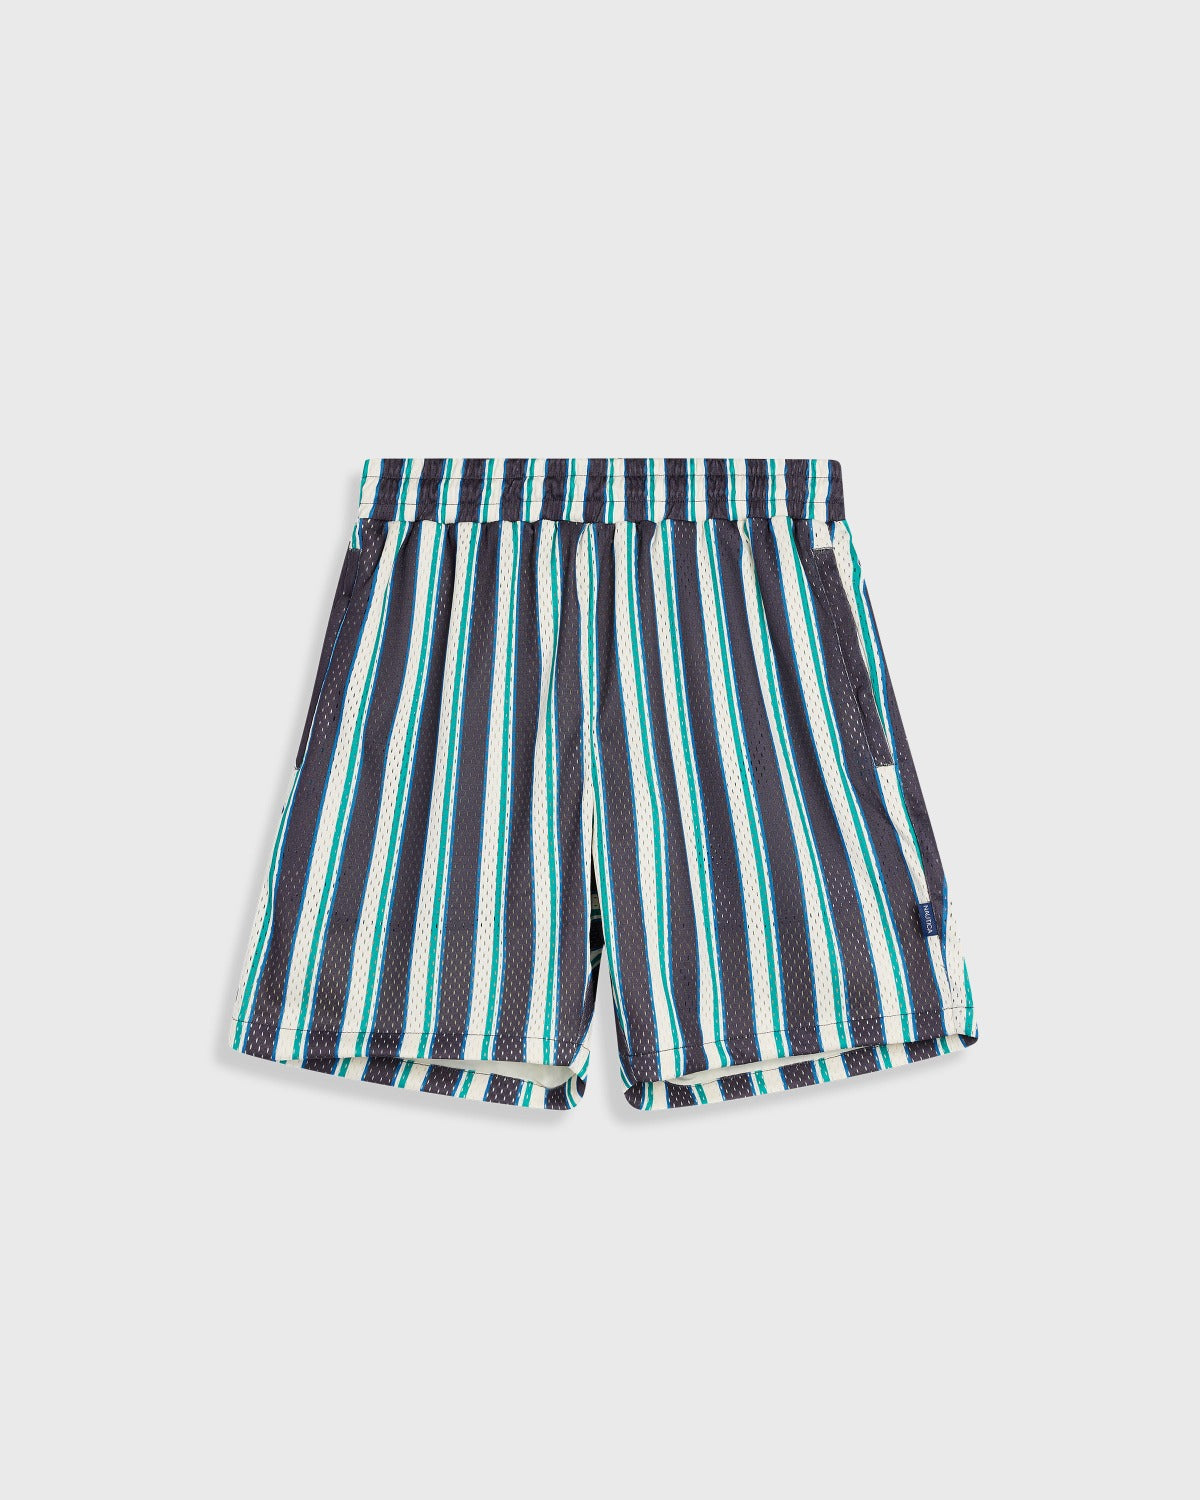 KROST x Nautica | Striped Mesh Shorts navy turquoise and white stripe short